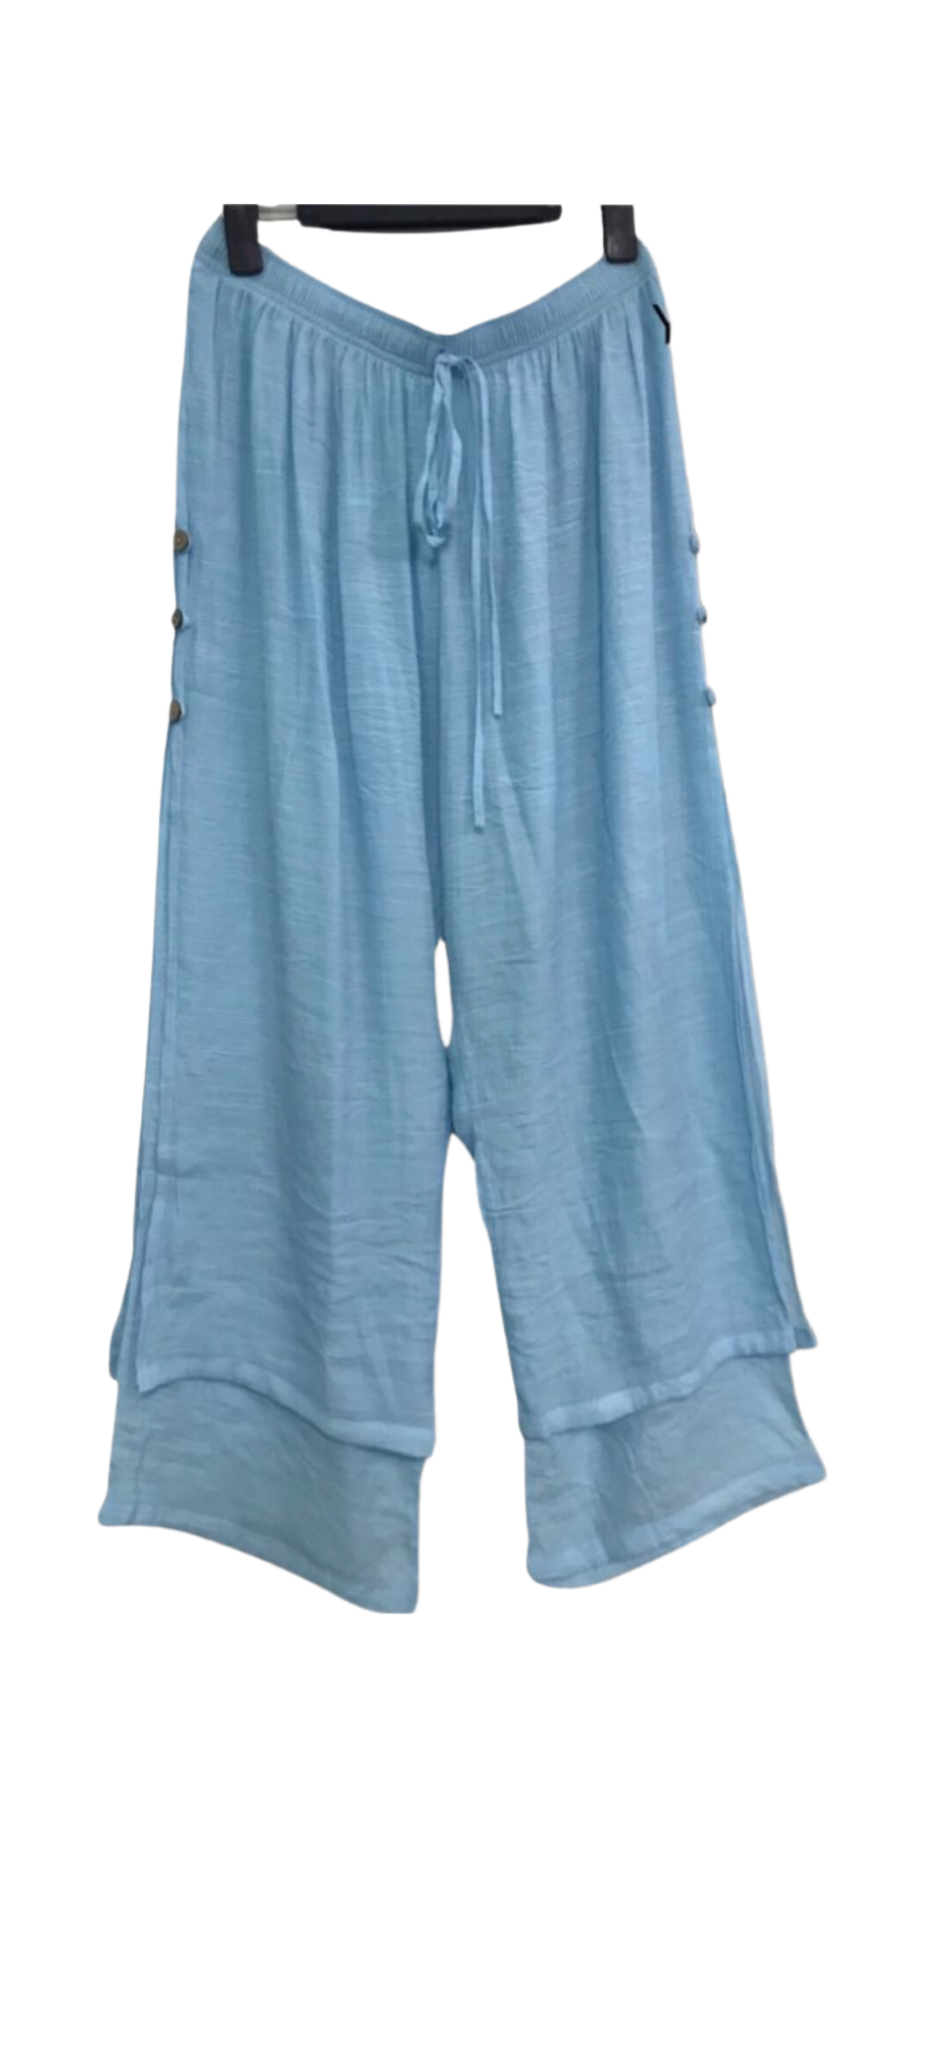 Bella Beach Capri Pants - FRENCH BLUE